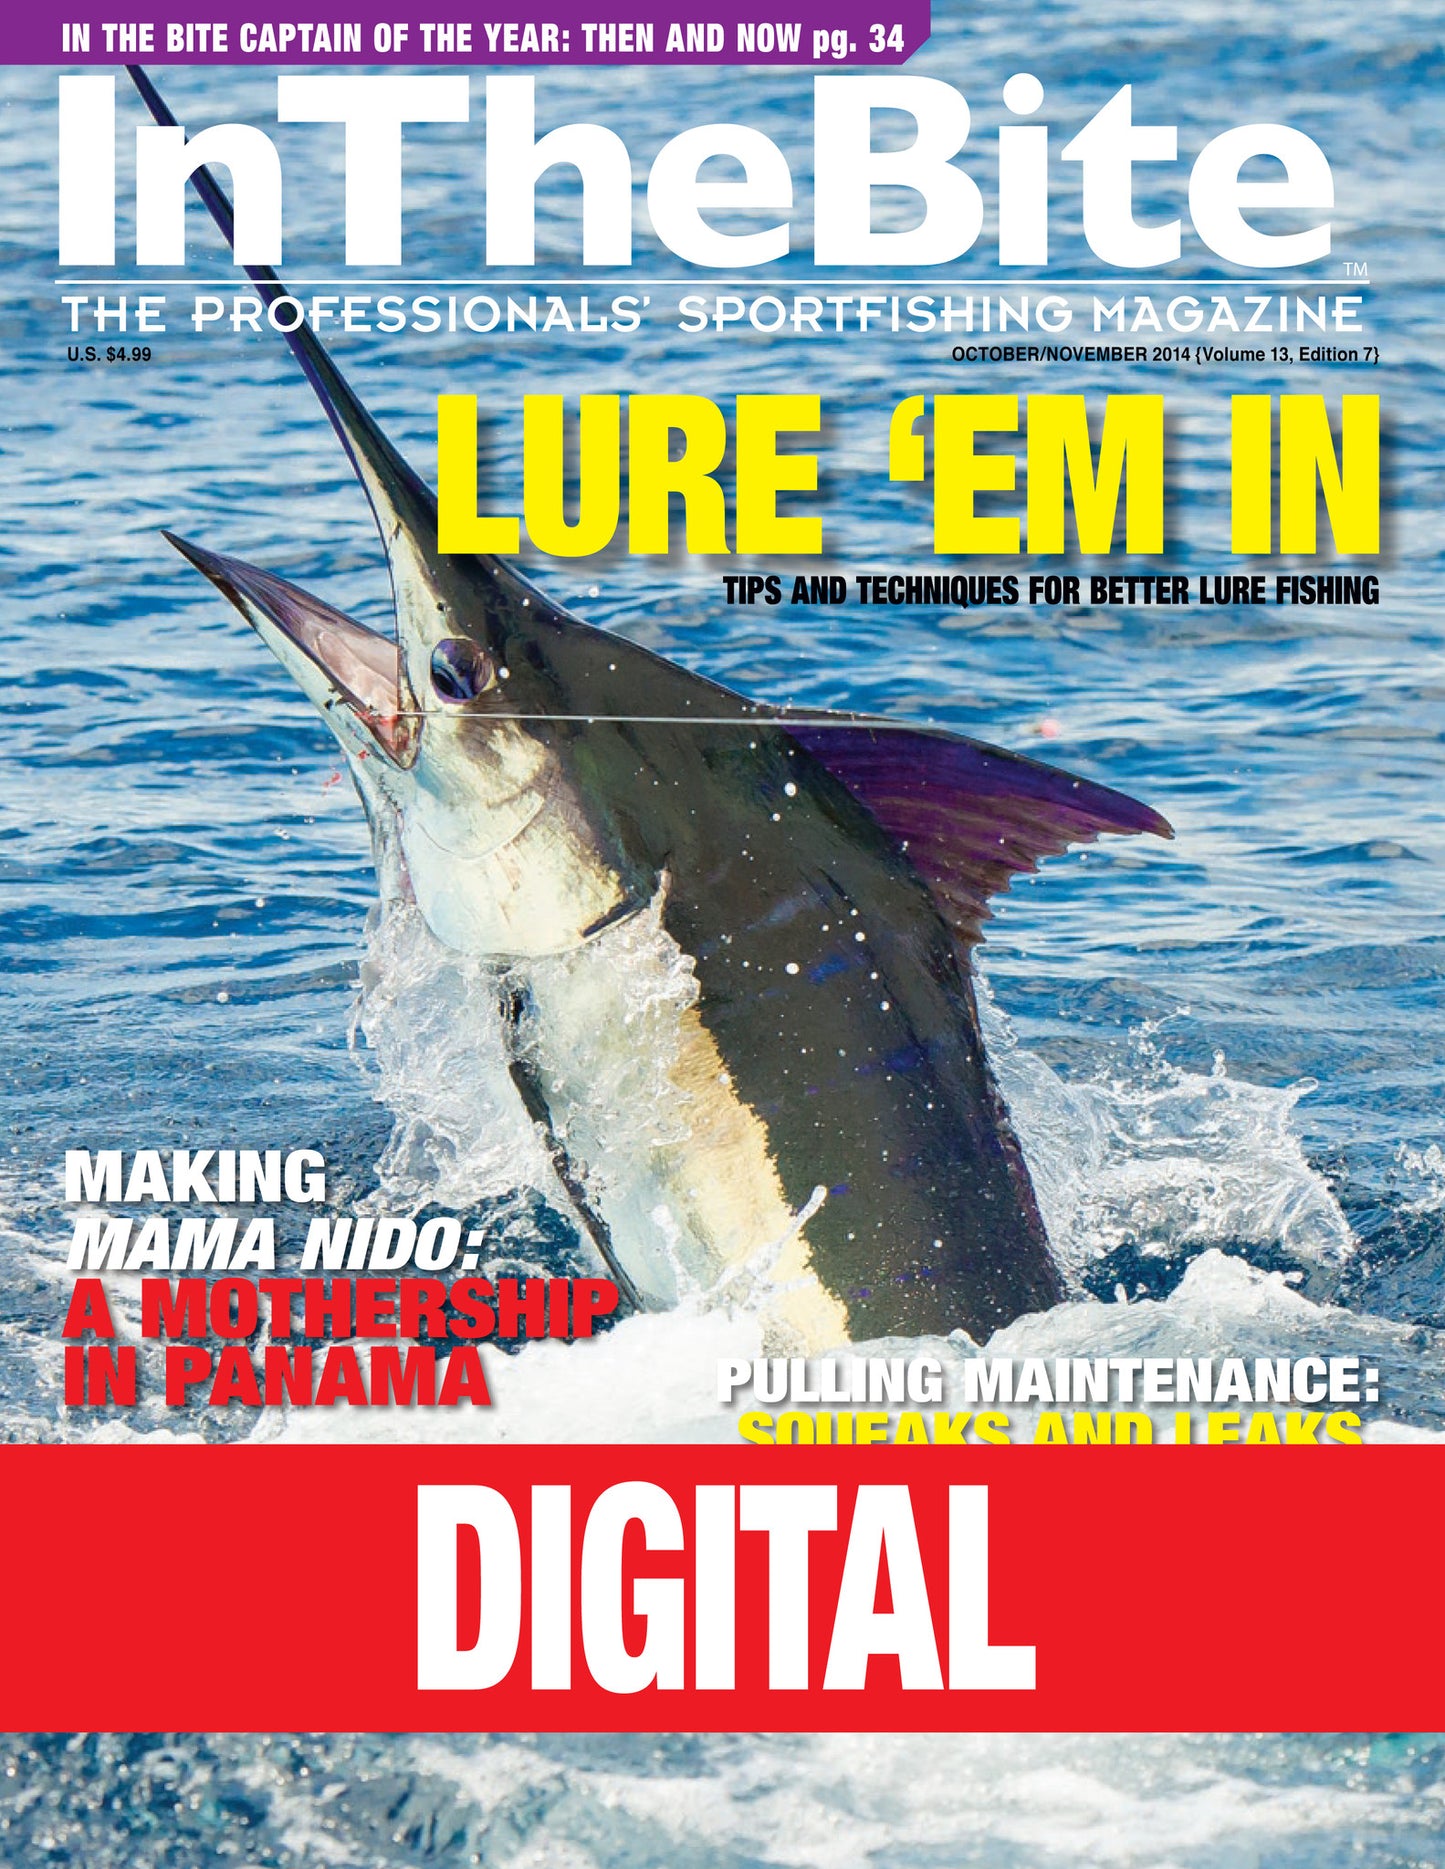 InTheBite Volume 14 Edition 04 - June 2015 - Digital Edition